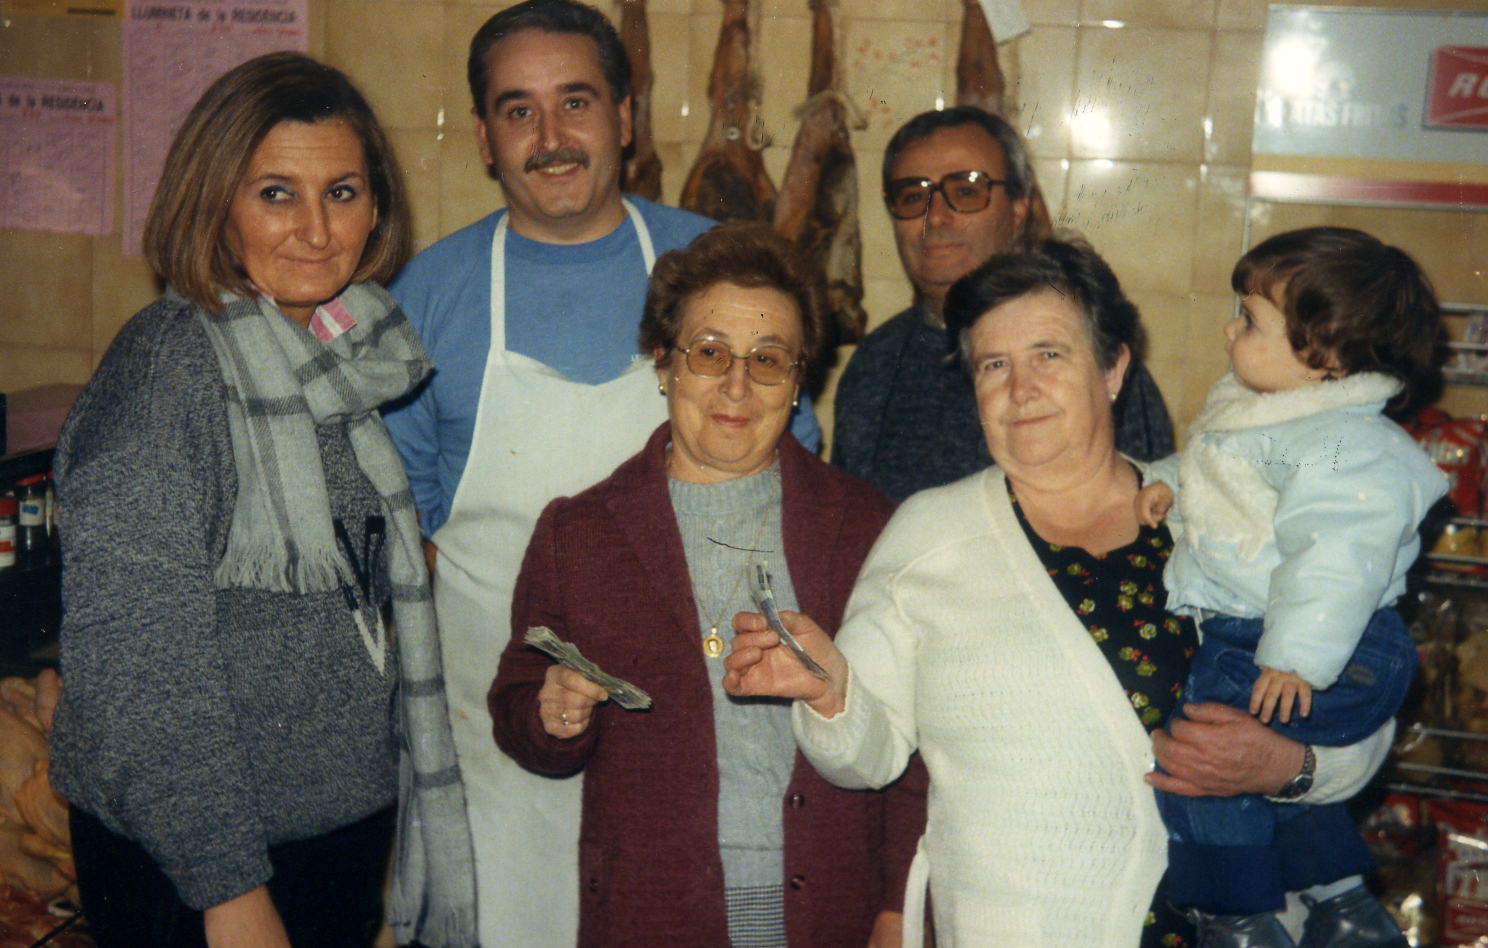 1986. Llumineta Carnisseria Costa